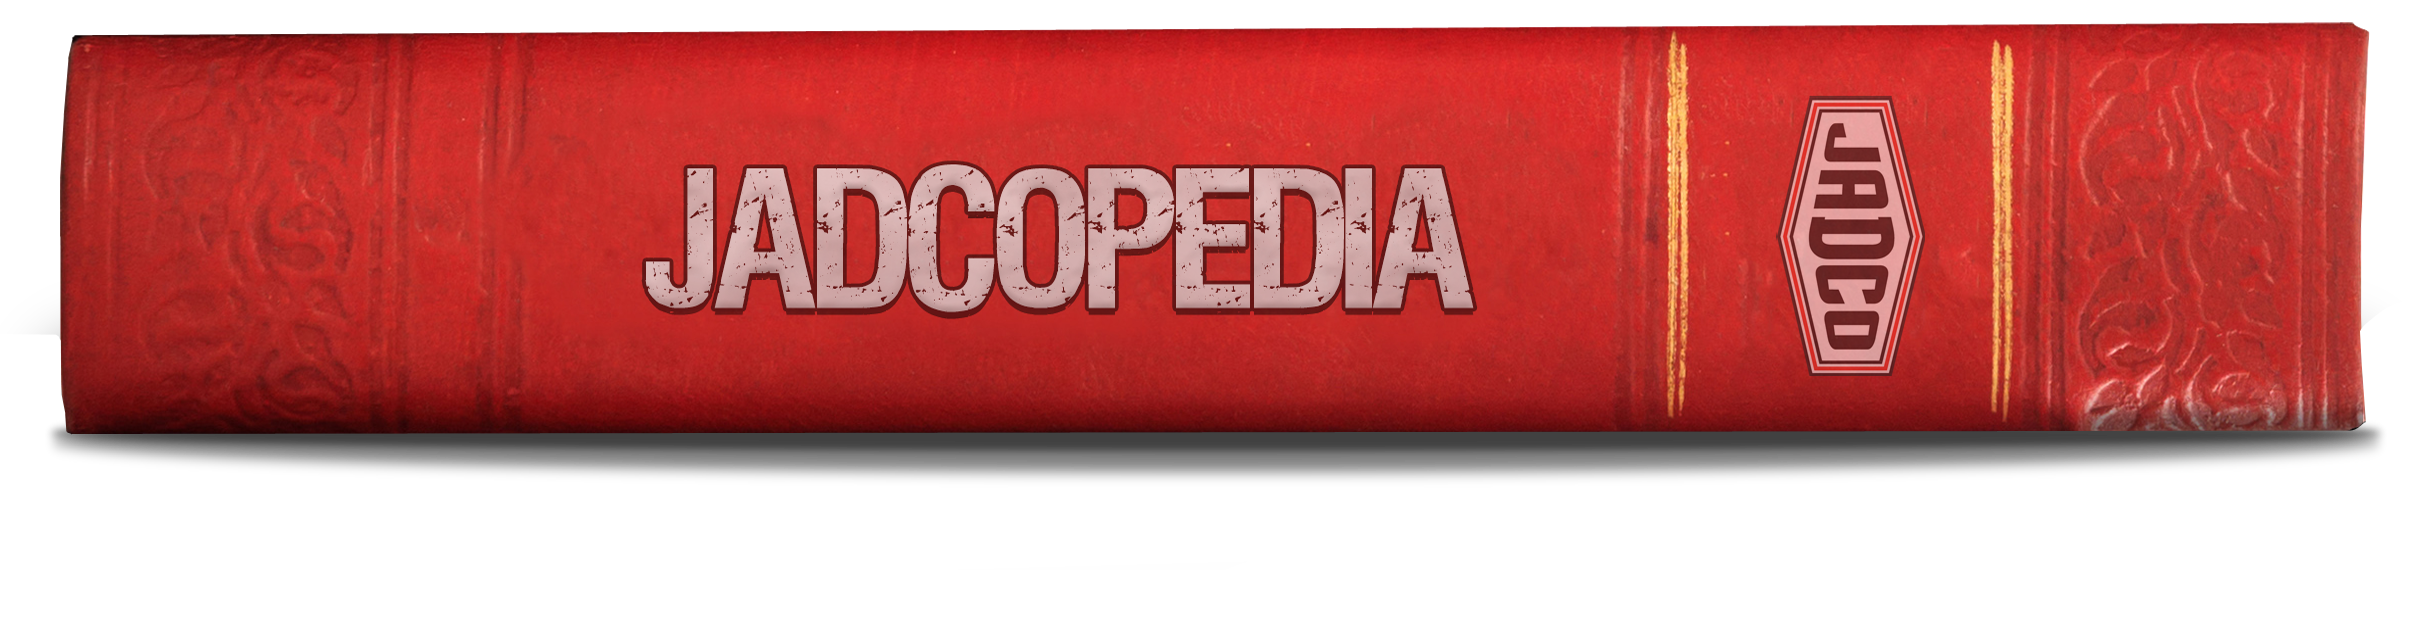 Jadcopedia